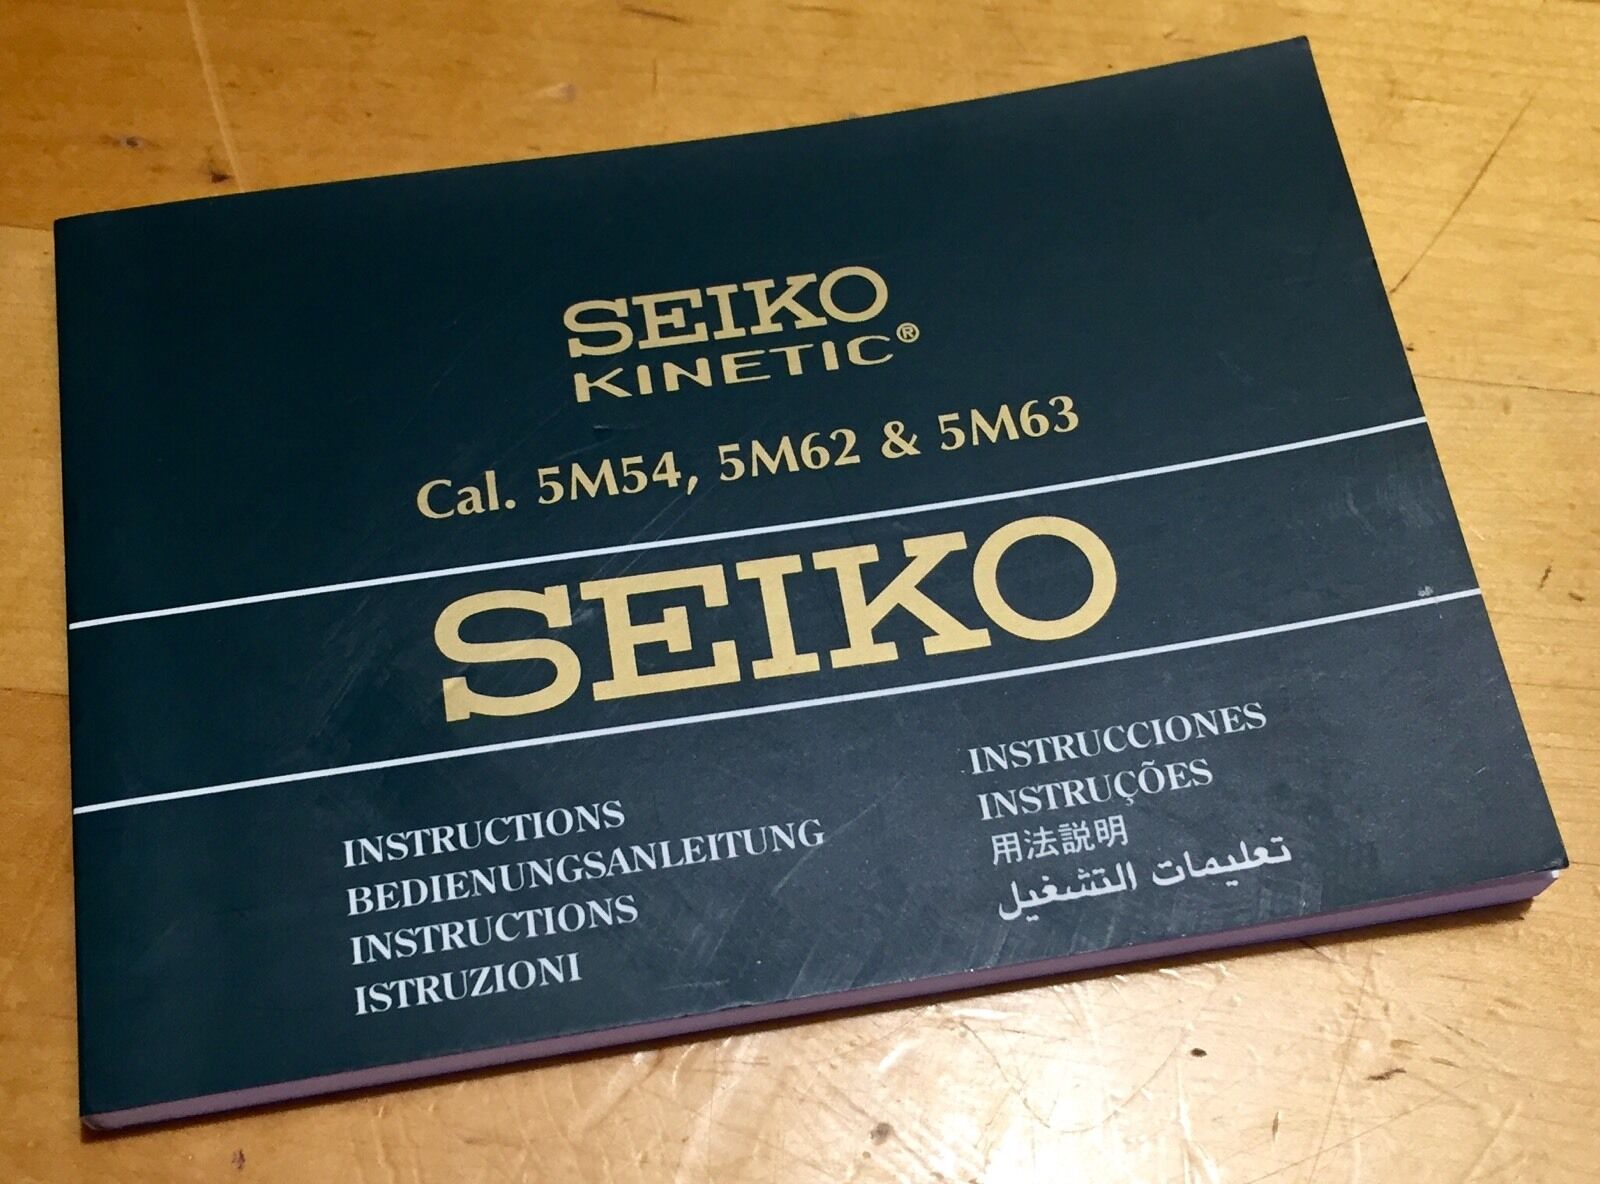 SEIKO Instruction Manual Booklet Cal. 5M54 5M62 5M63 Instruzioni 2009 OEM /